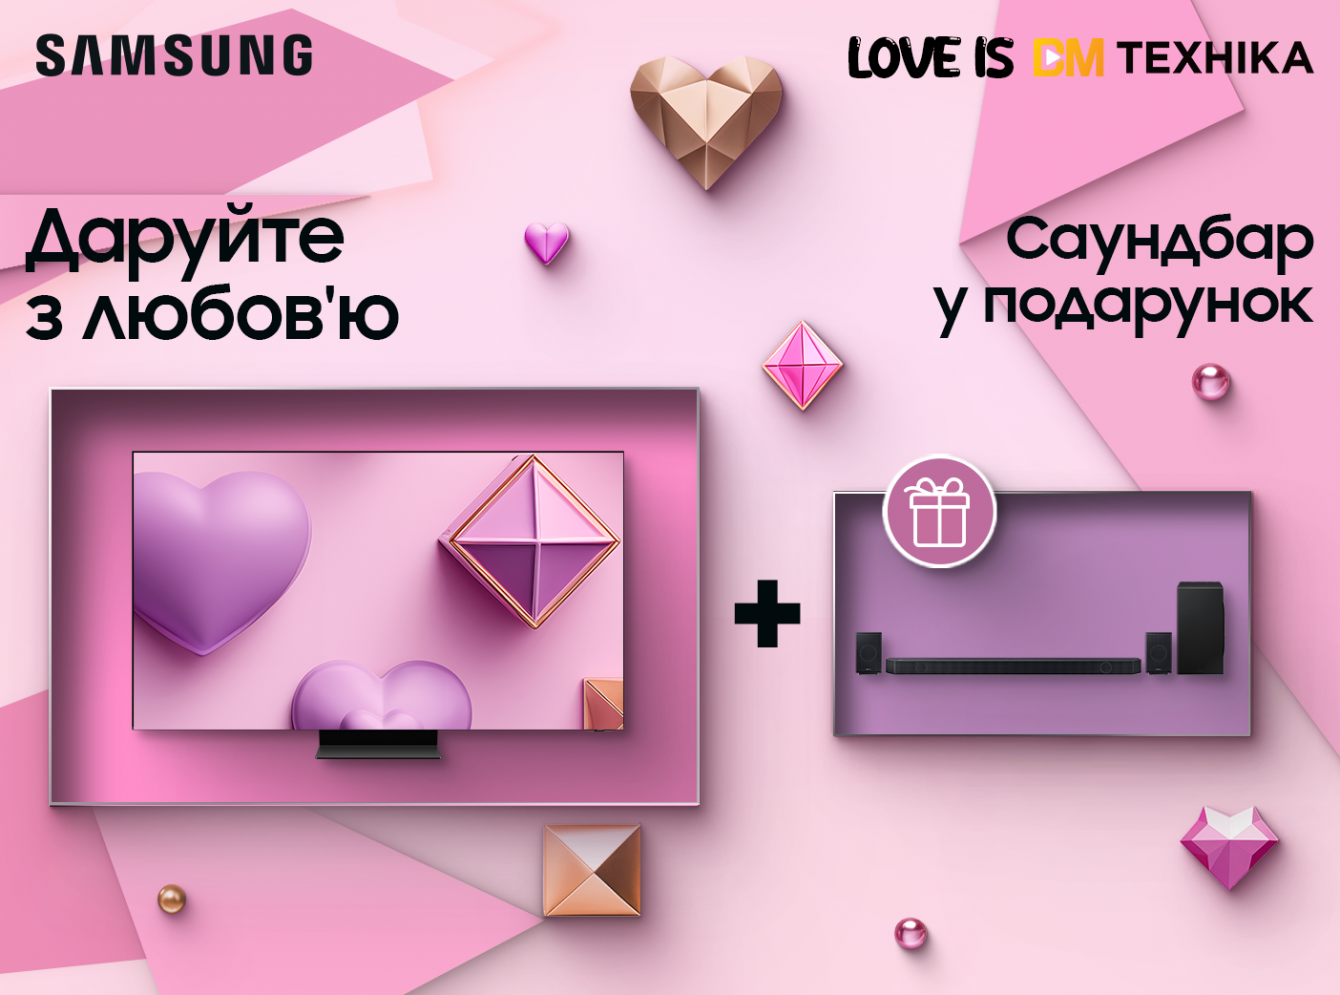 Дарите Samsung с любовью